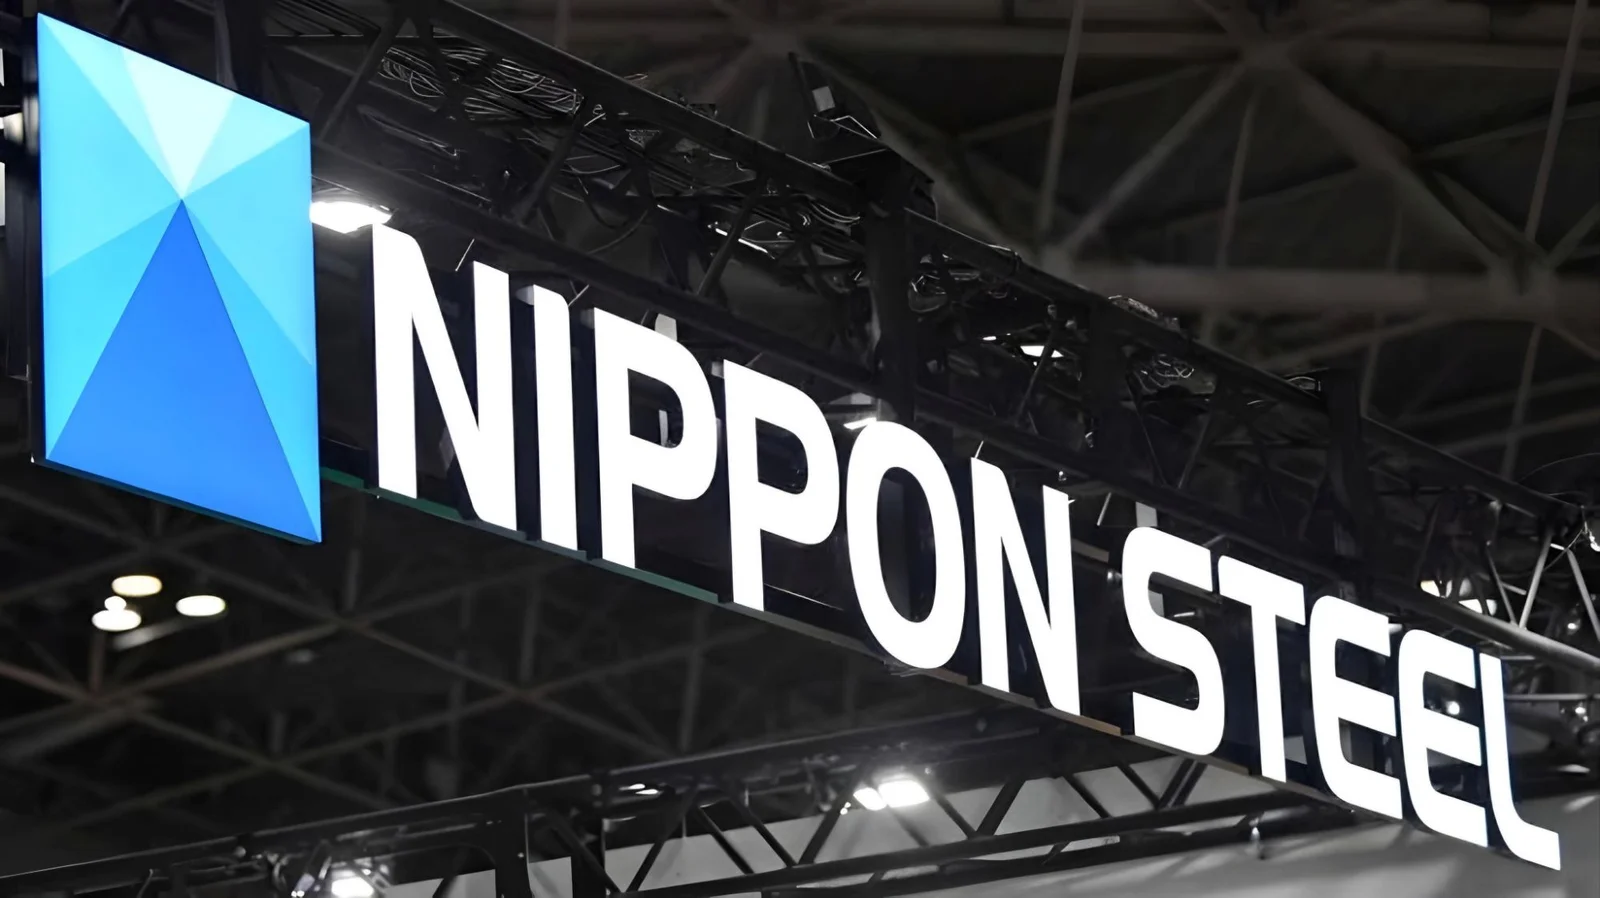 Nippon Steel